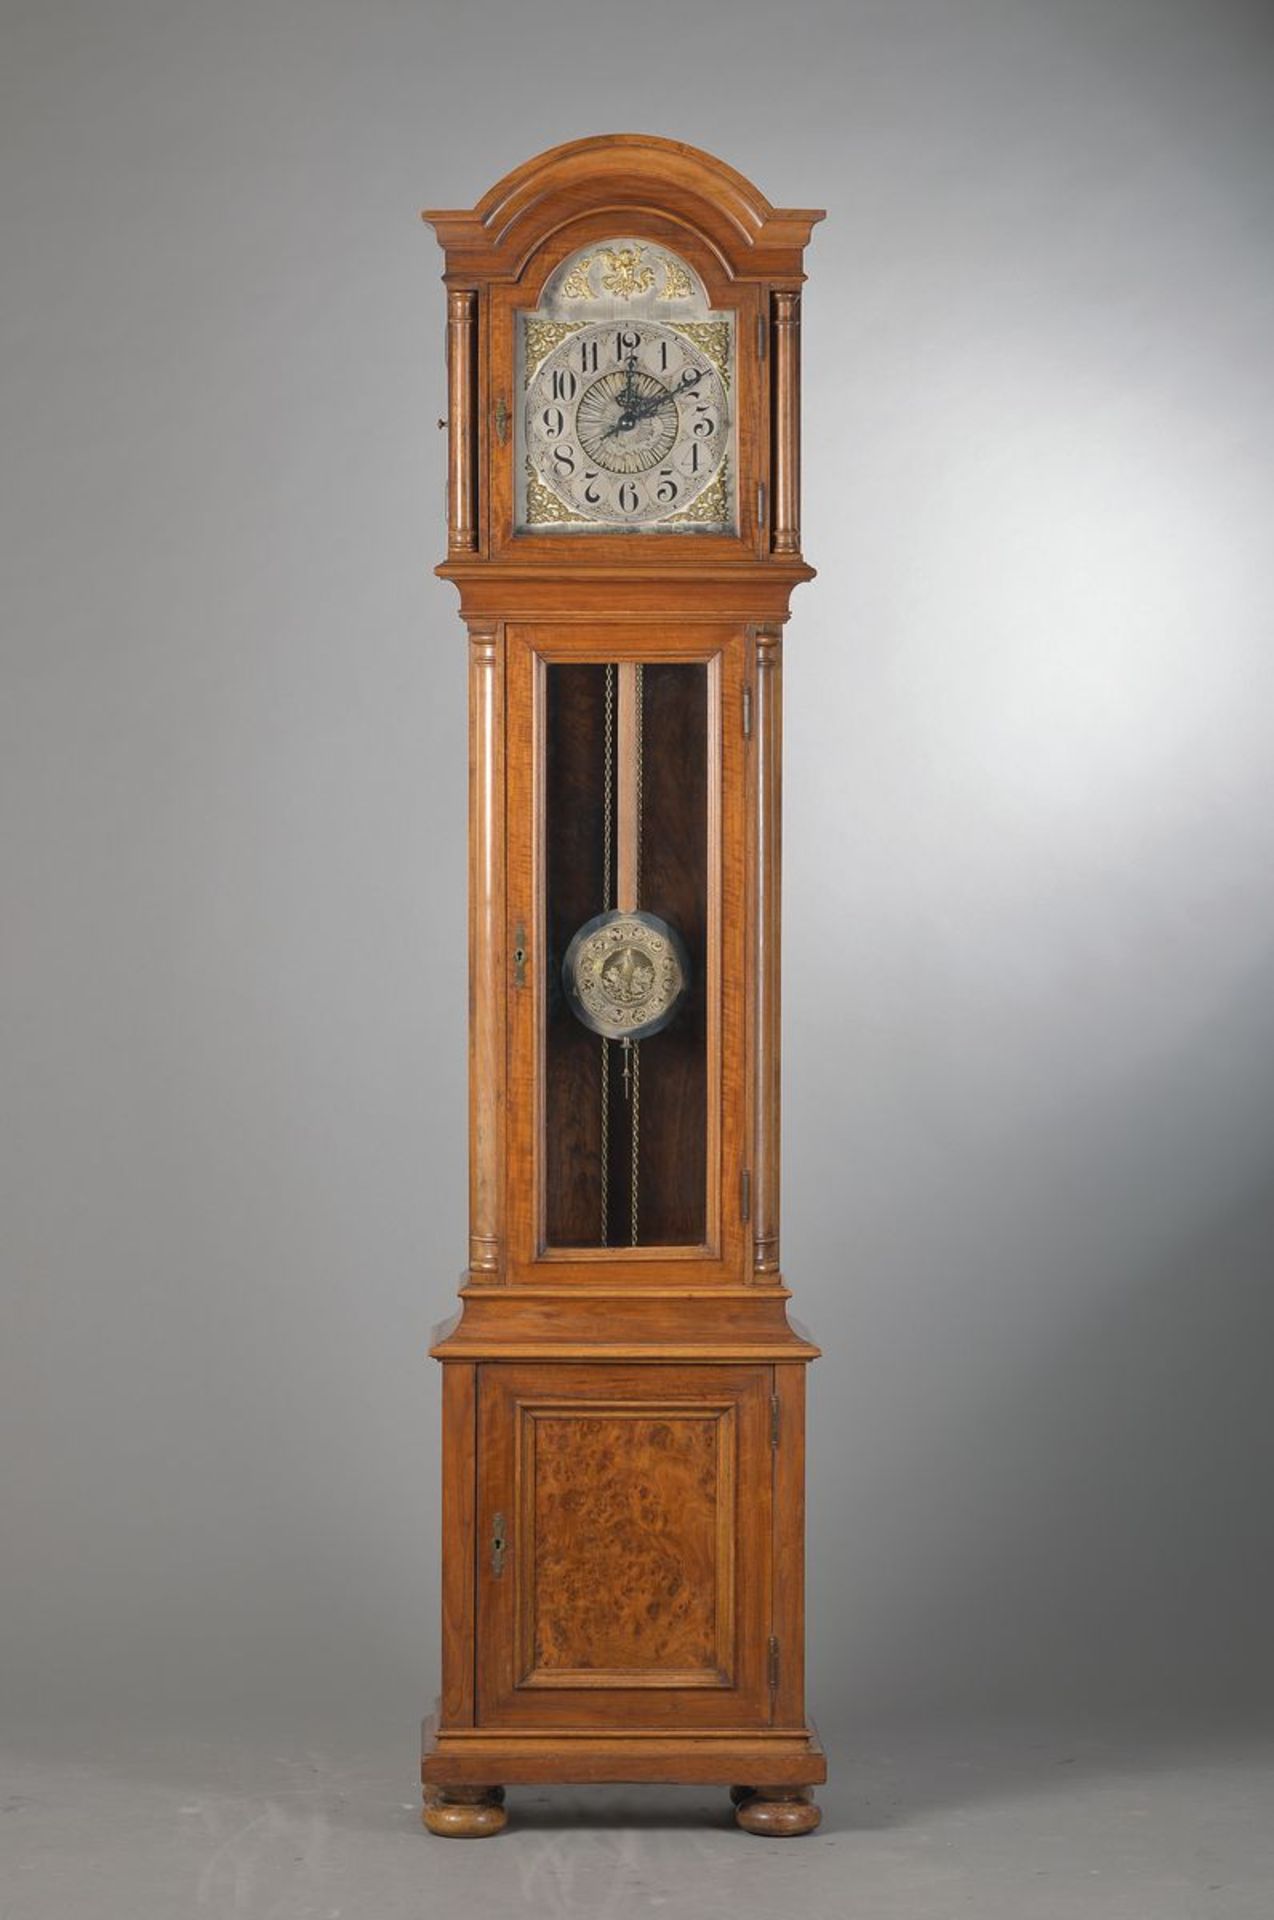 Standuhr, Uhrenmanufaktur Mauthe, um 1900-10, Hartholzgehäuse, einteilig mit alter Politur, obere